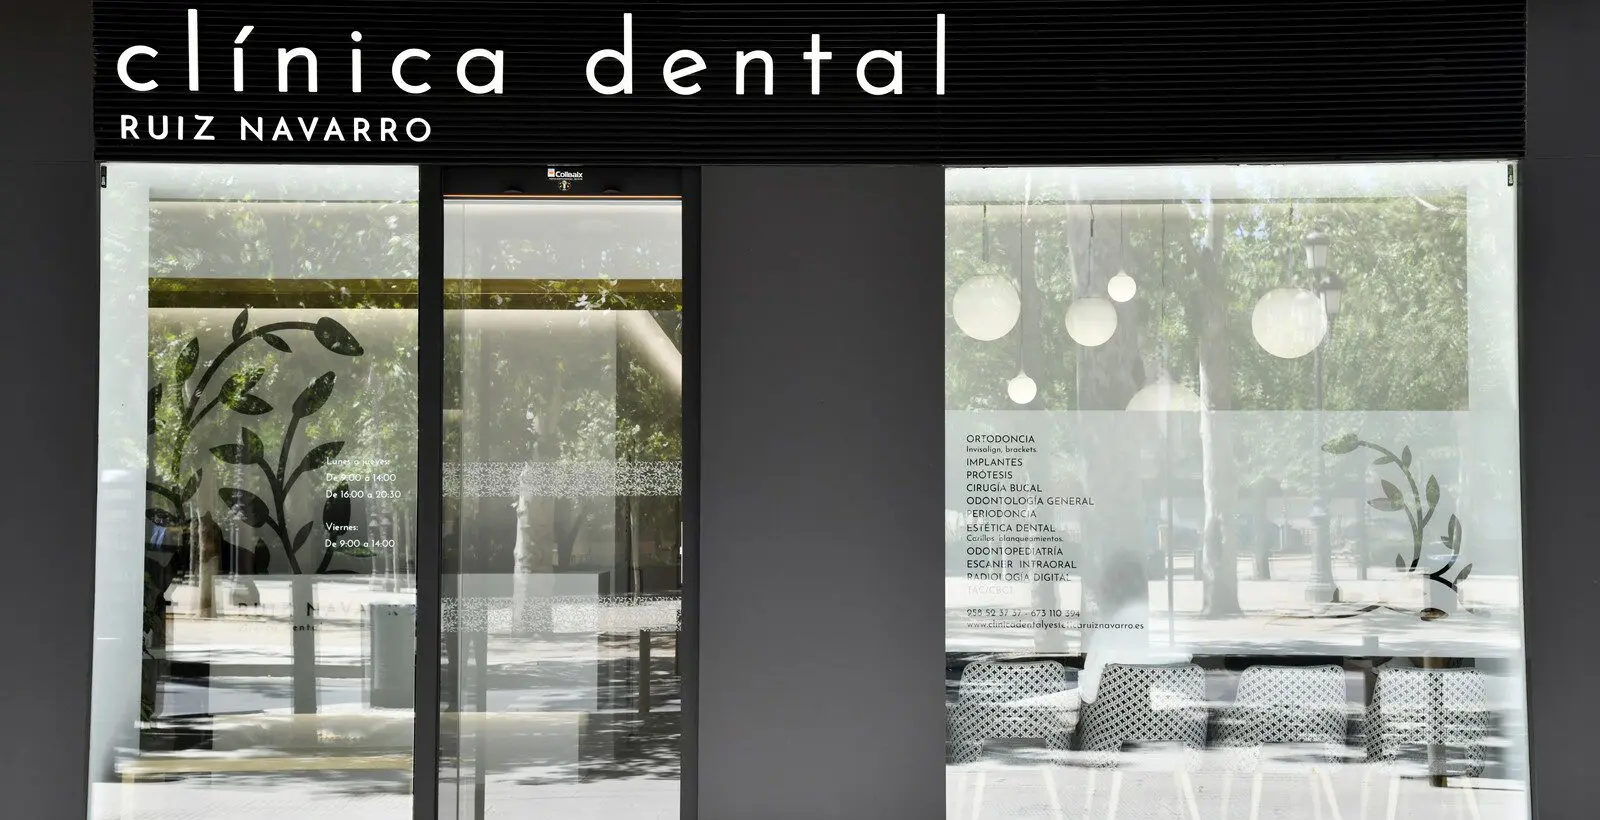 Bruxismo - Centro Dental Integral Albayda, Granada